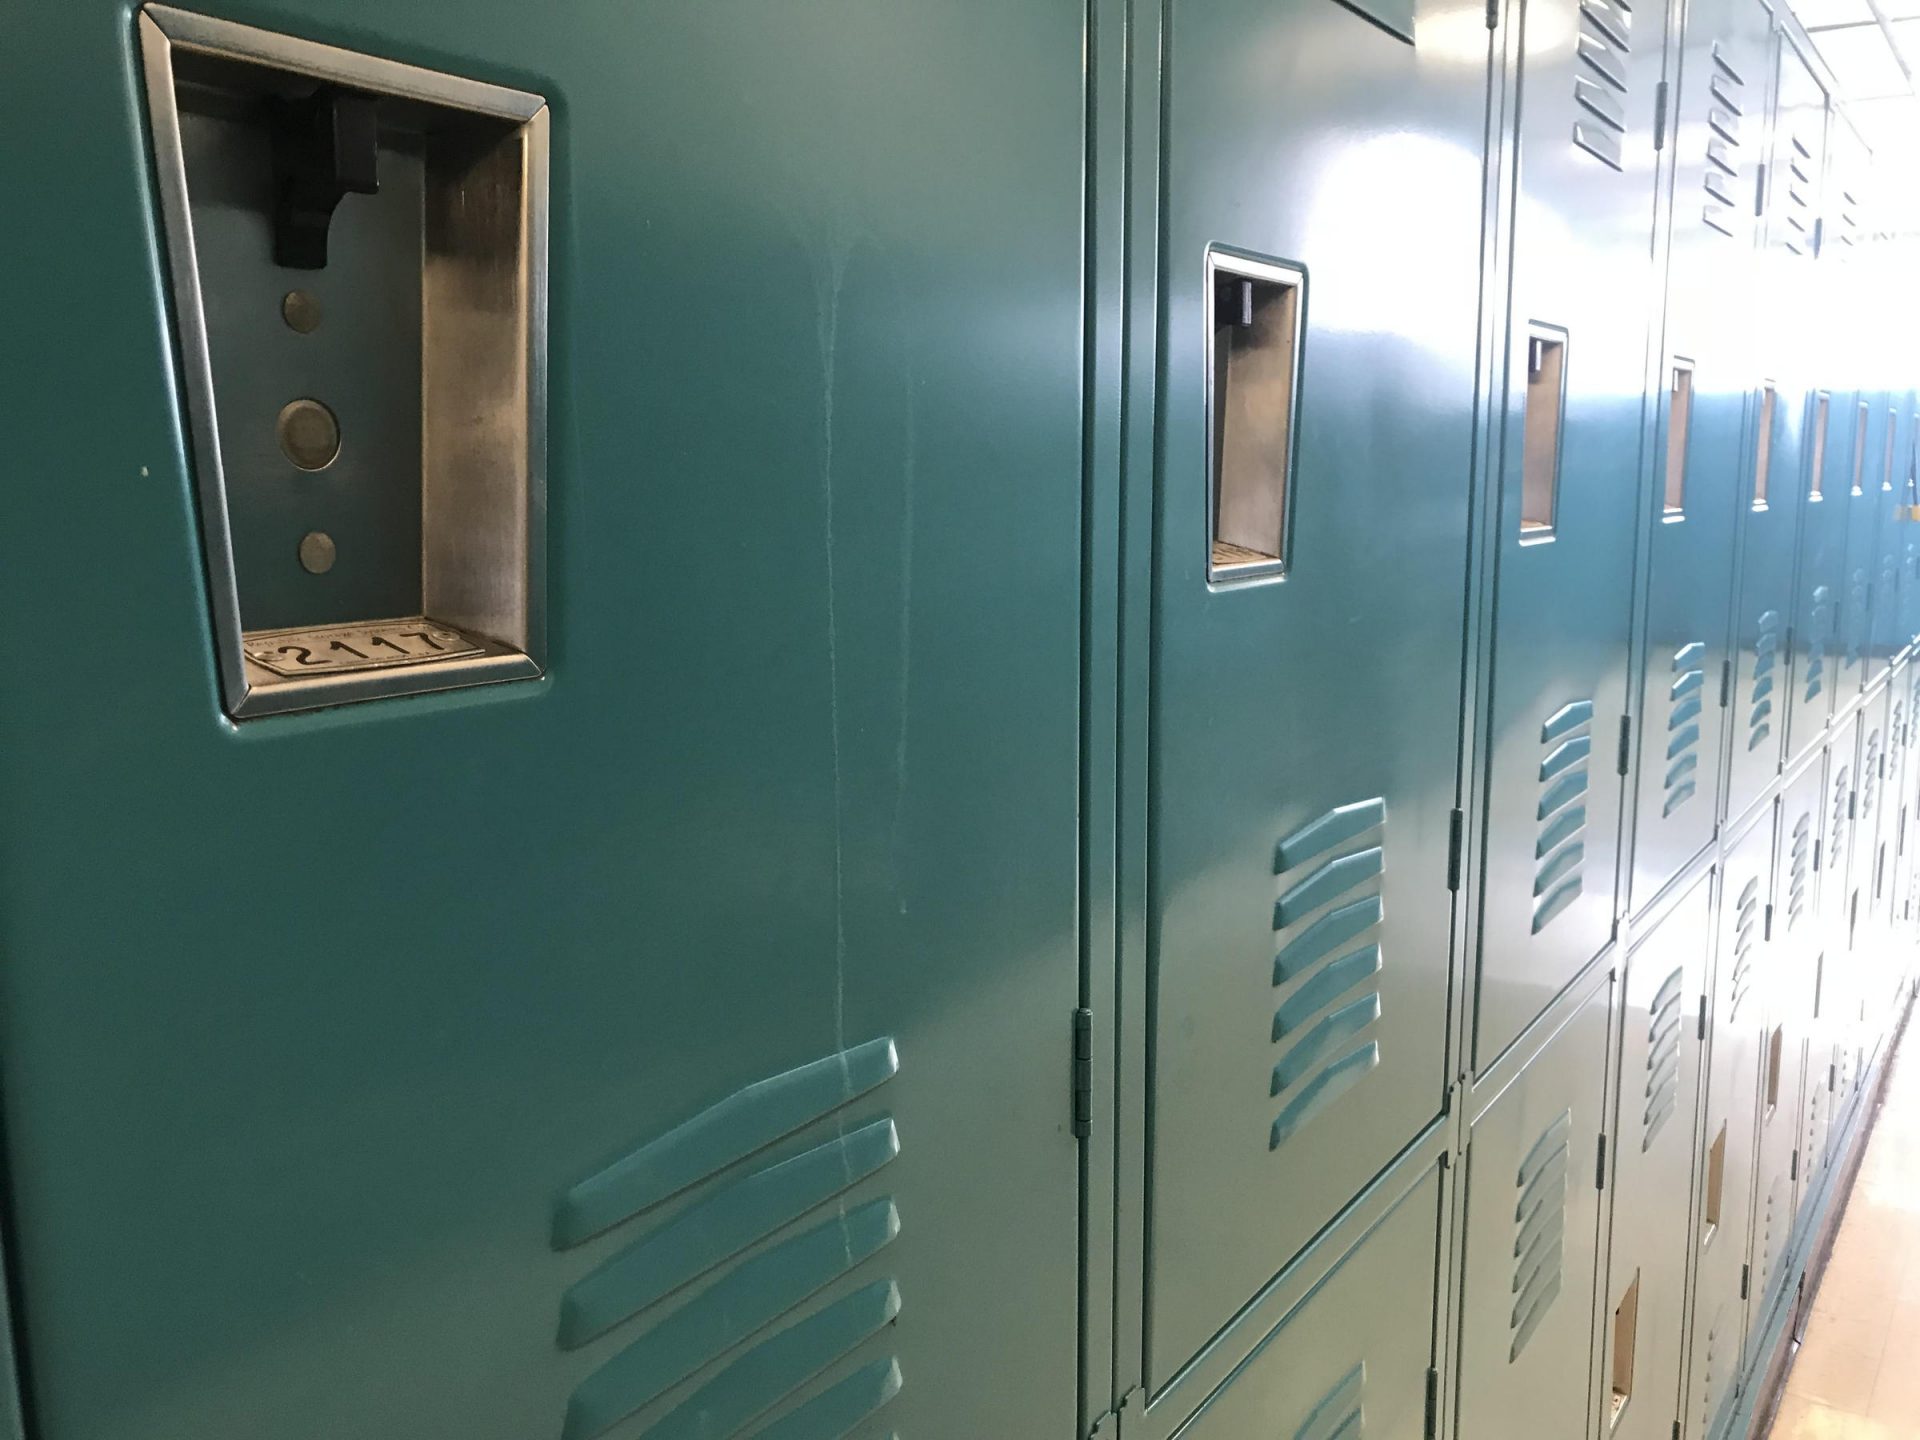 Lockers line a hallway at Brashear Middle School in Pittsburgh.